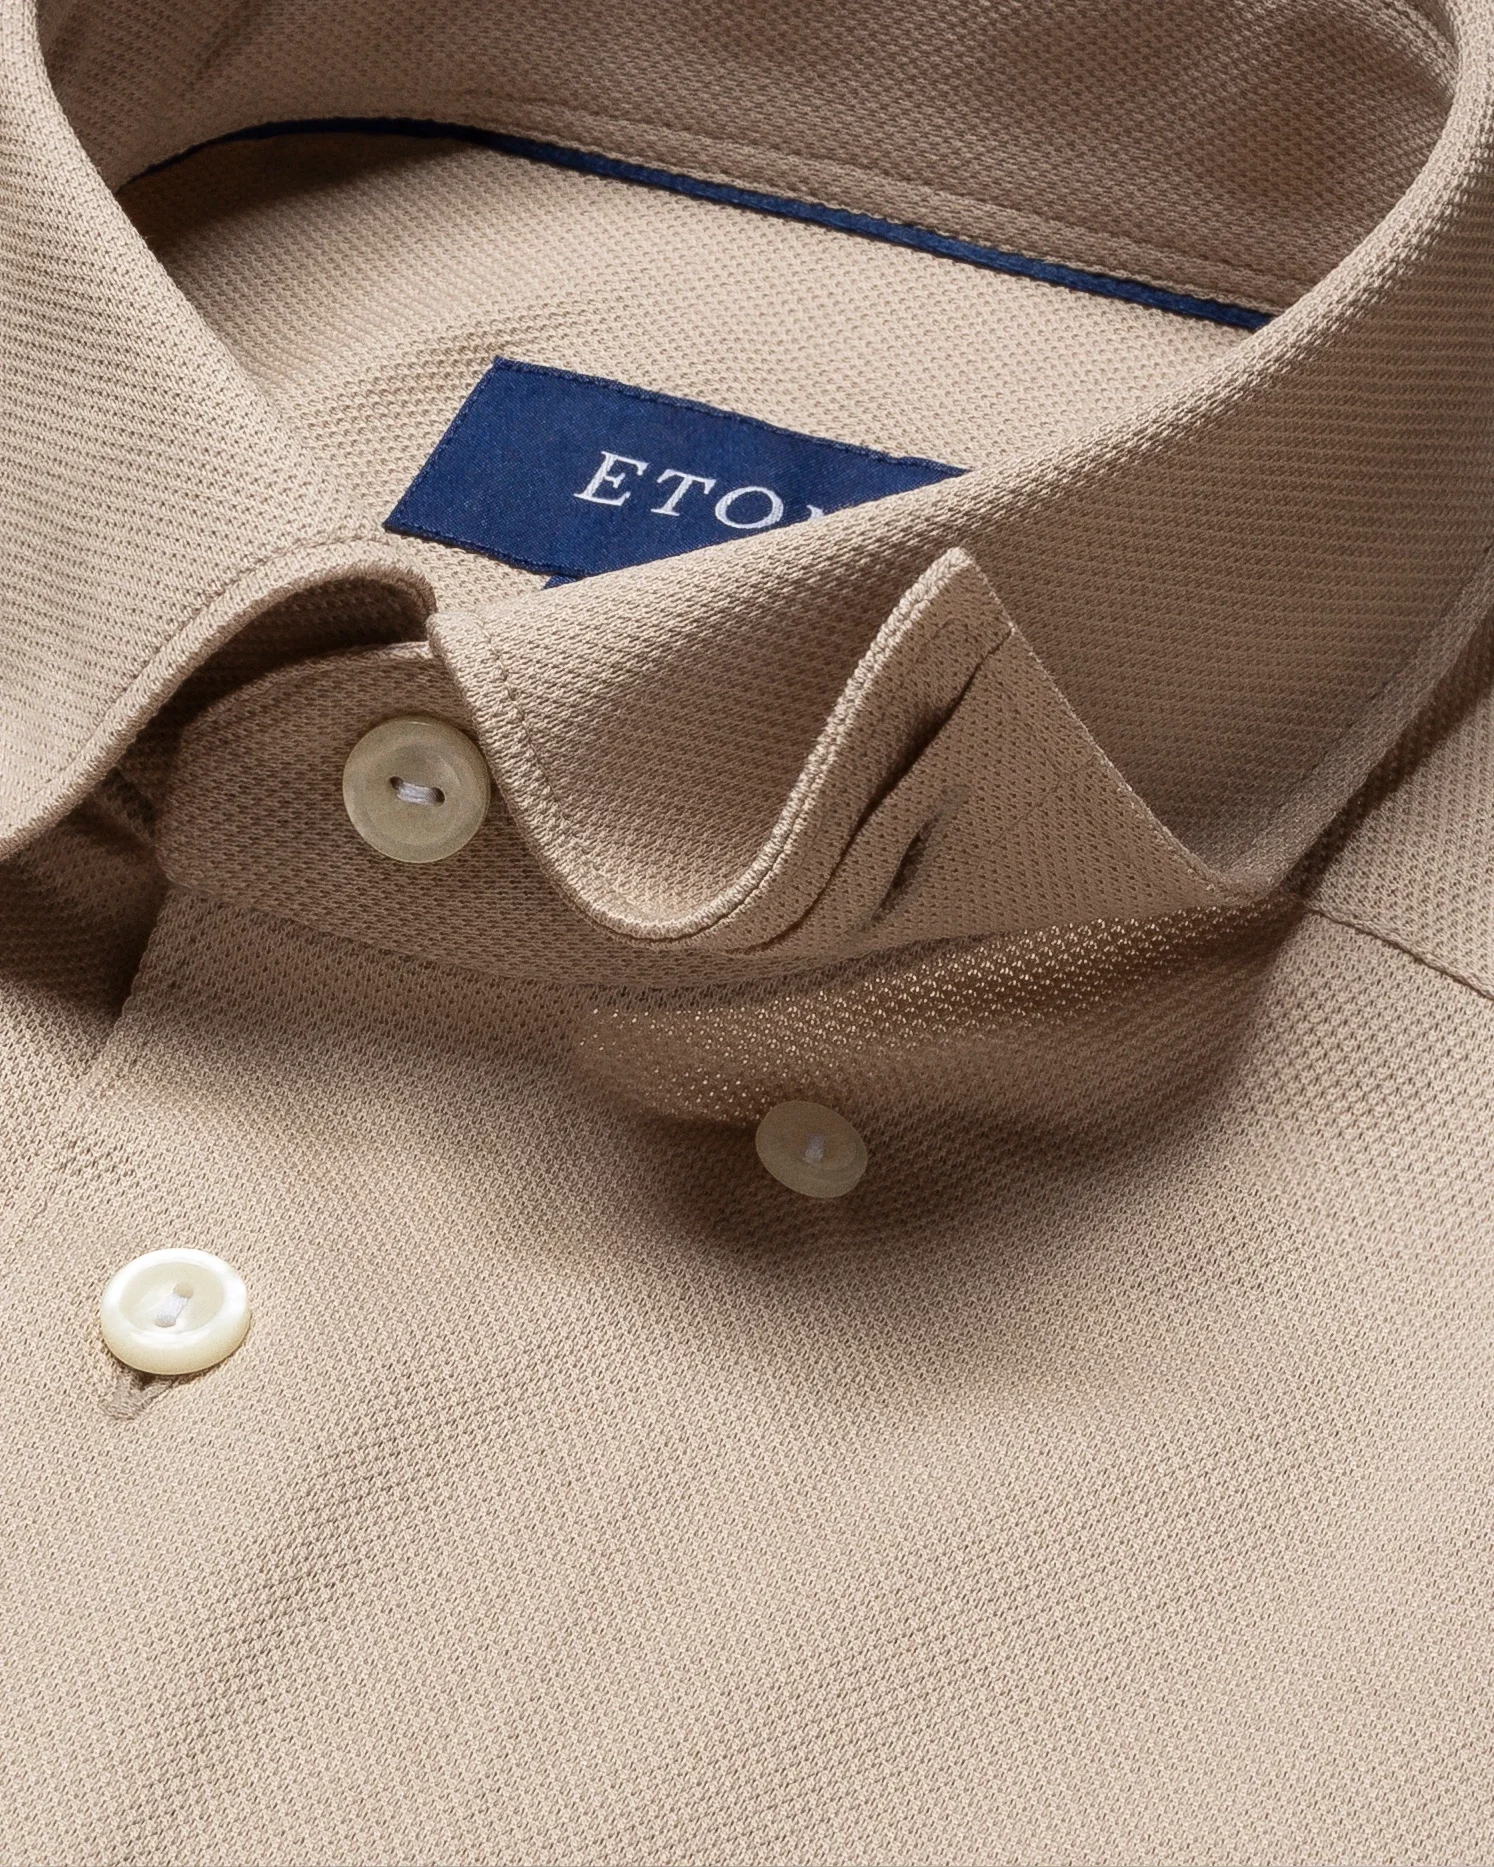 Eton - brown polo shirt